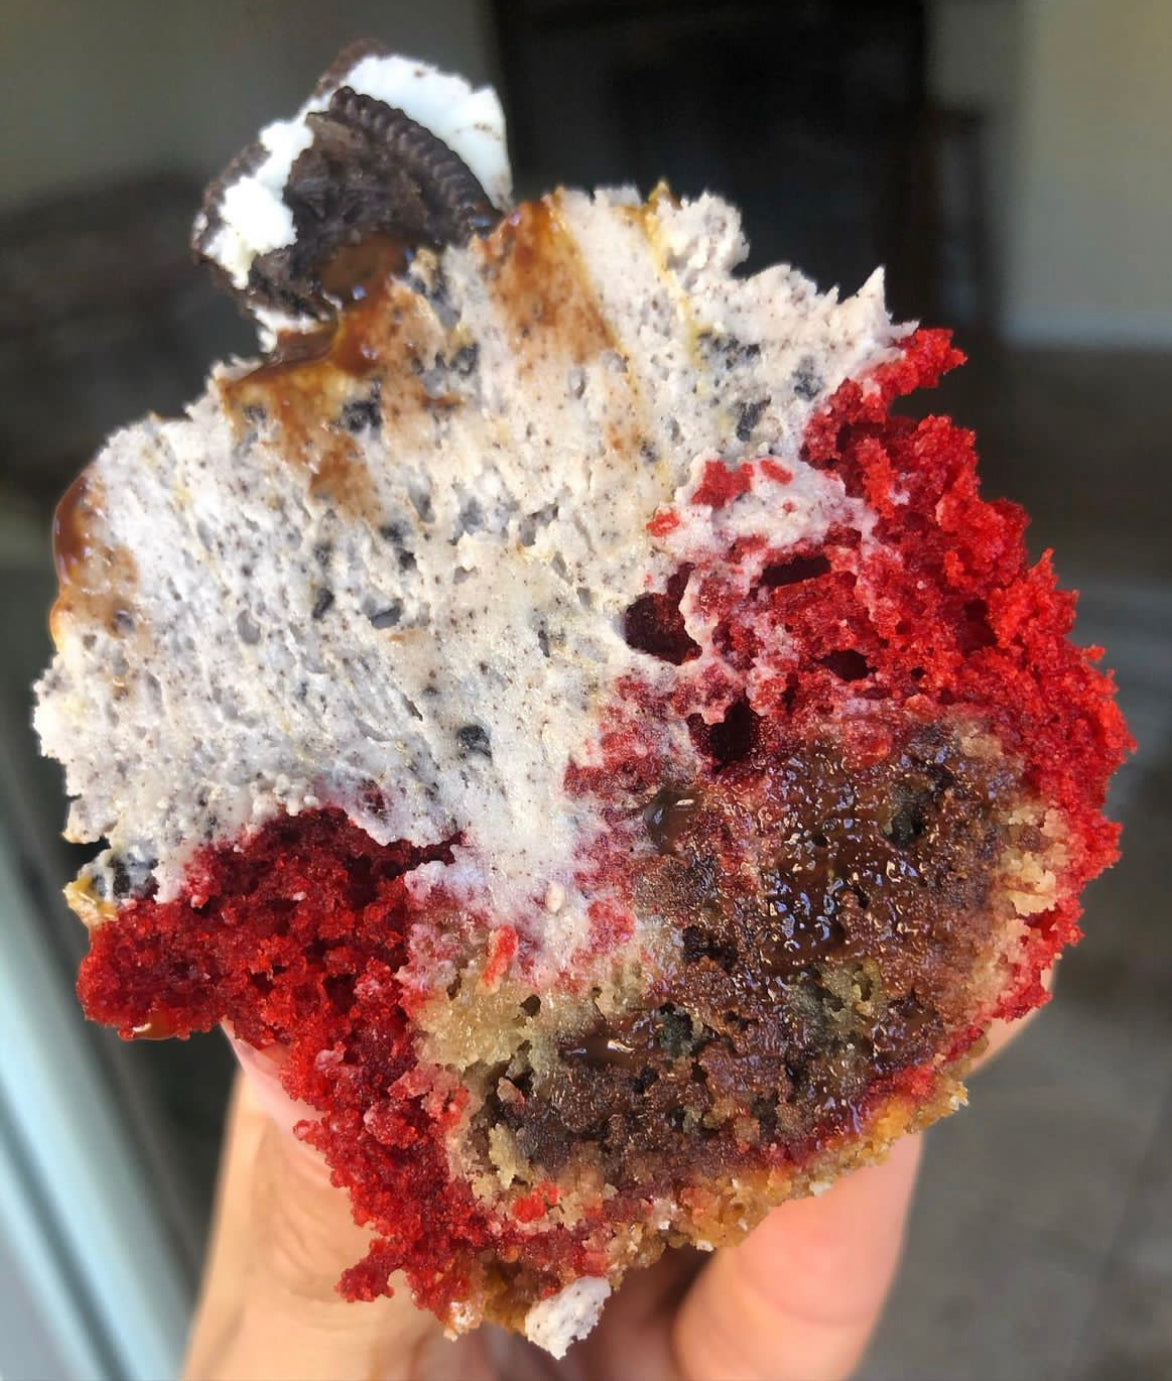 Velvet Volcano Cupcakes - Mcks' Cupcakes in South Florida